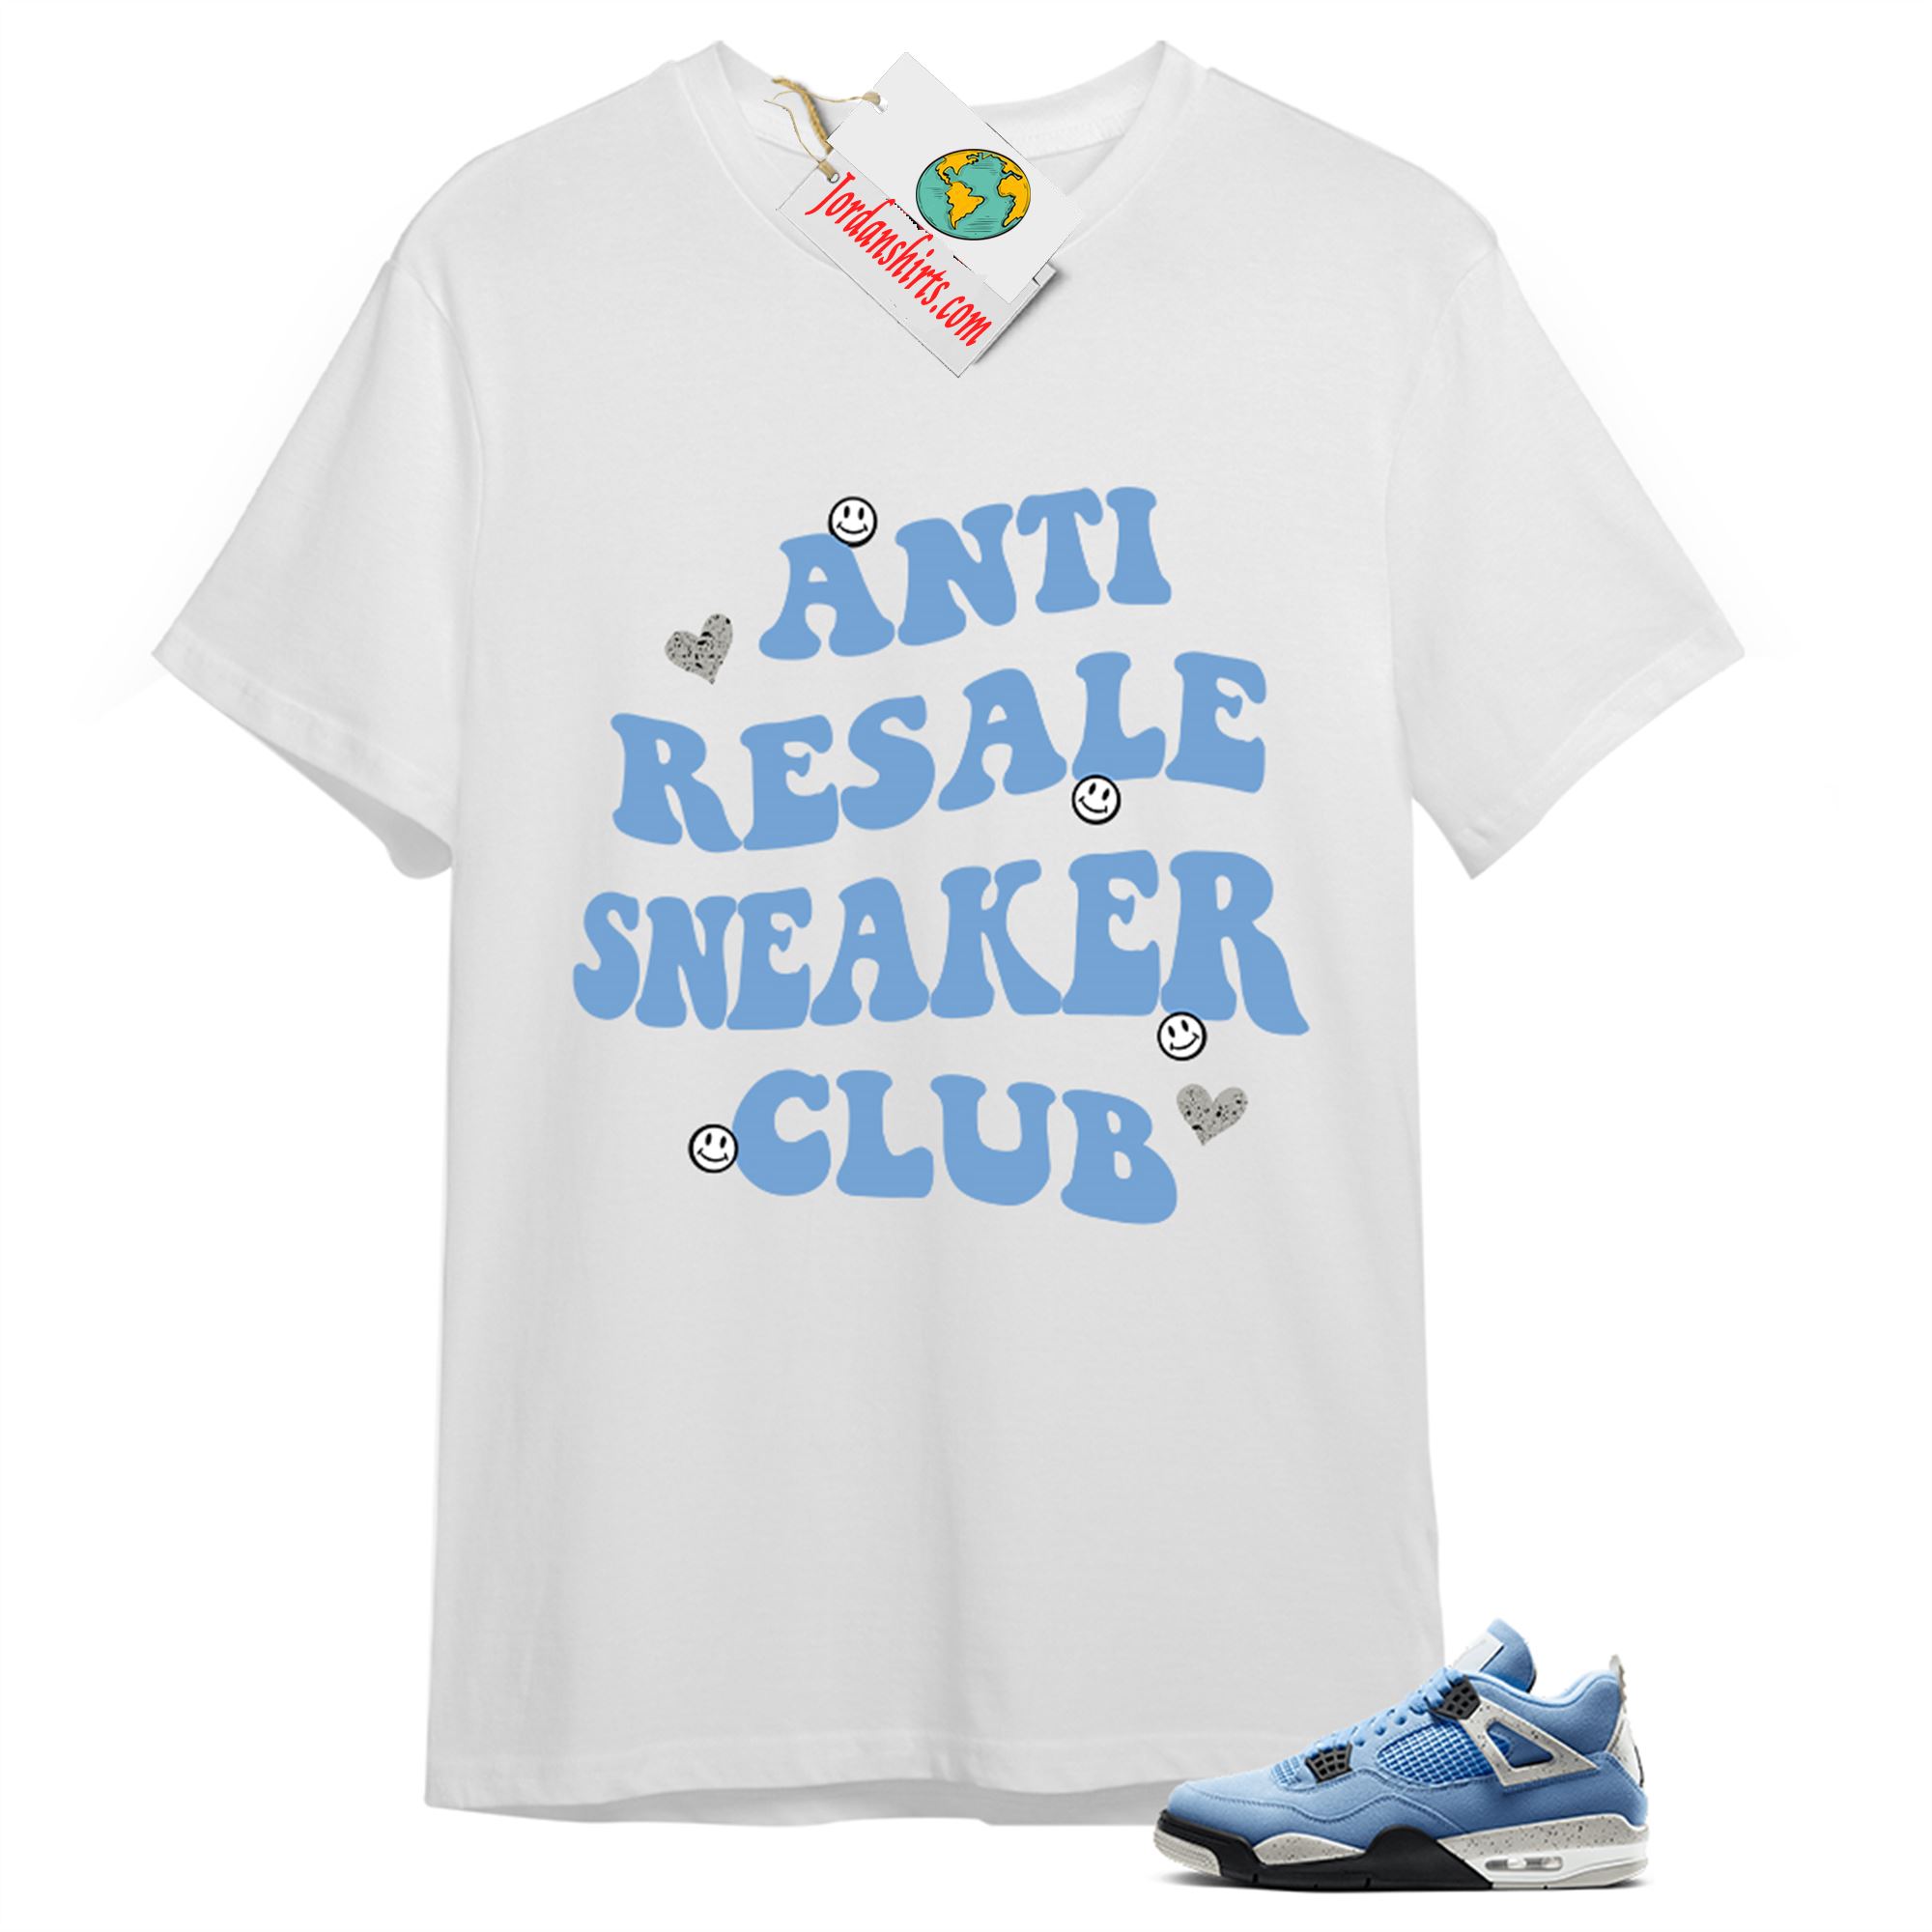 Jordan 4 Shirt, Anti Resale Sneaker Club White T-shirt Air Jordan 4 University Blue 4s Plus Size Up To 5xl